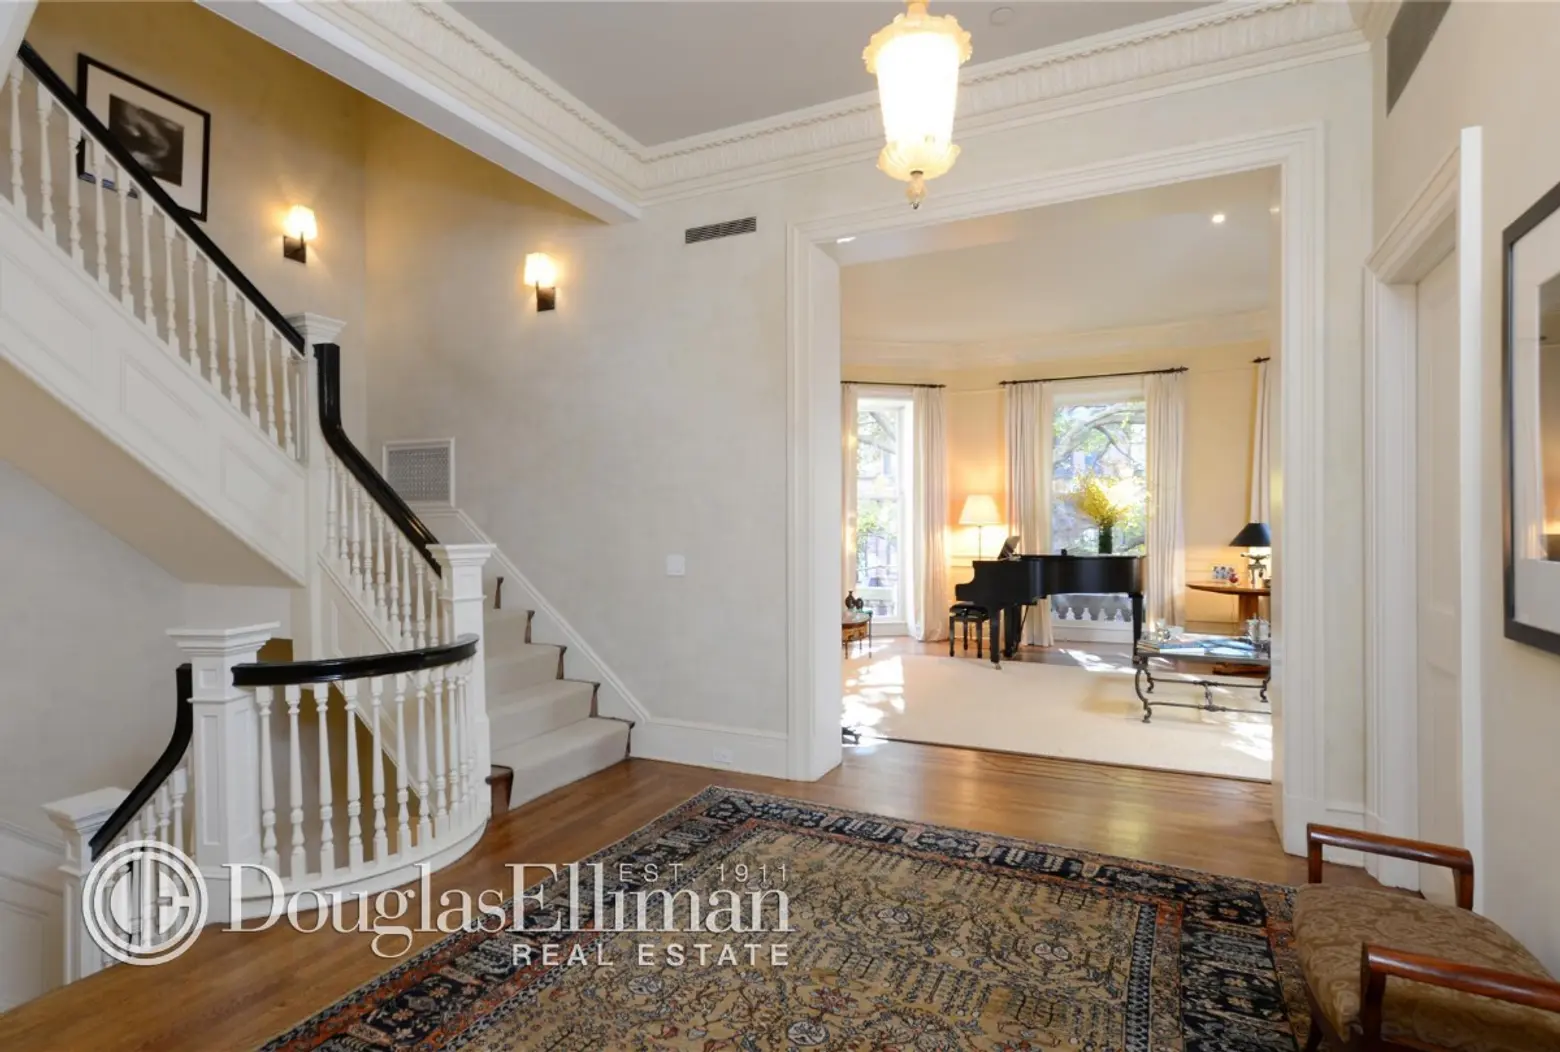 Bloomberg L.P. CEO Dan Doctoroff Sells Upper West Side Mansion for $11 Million